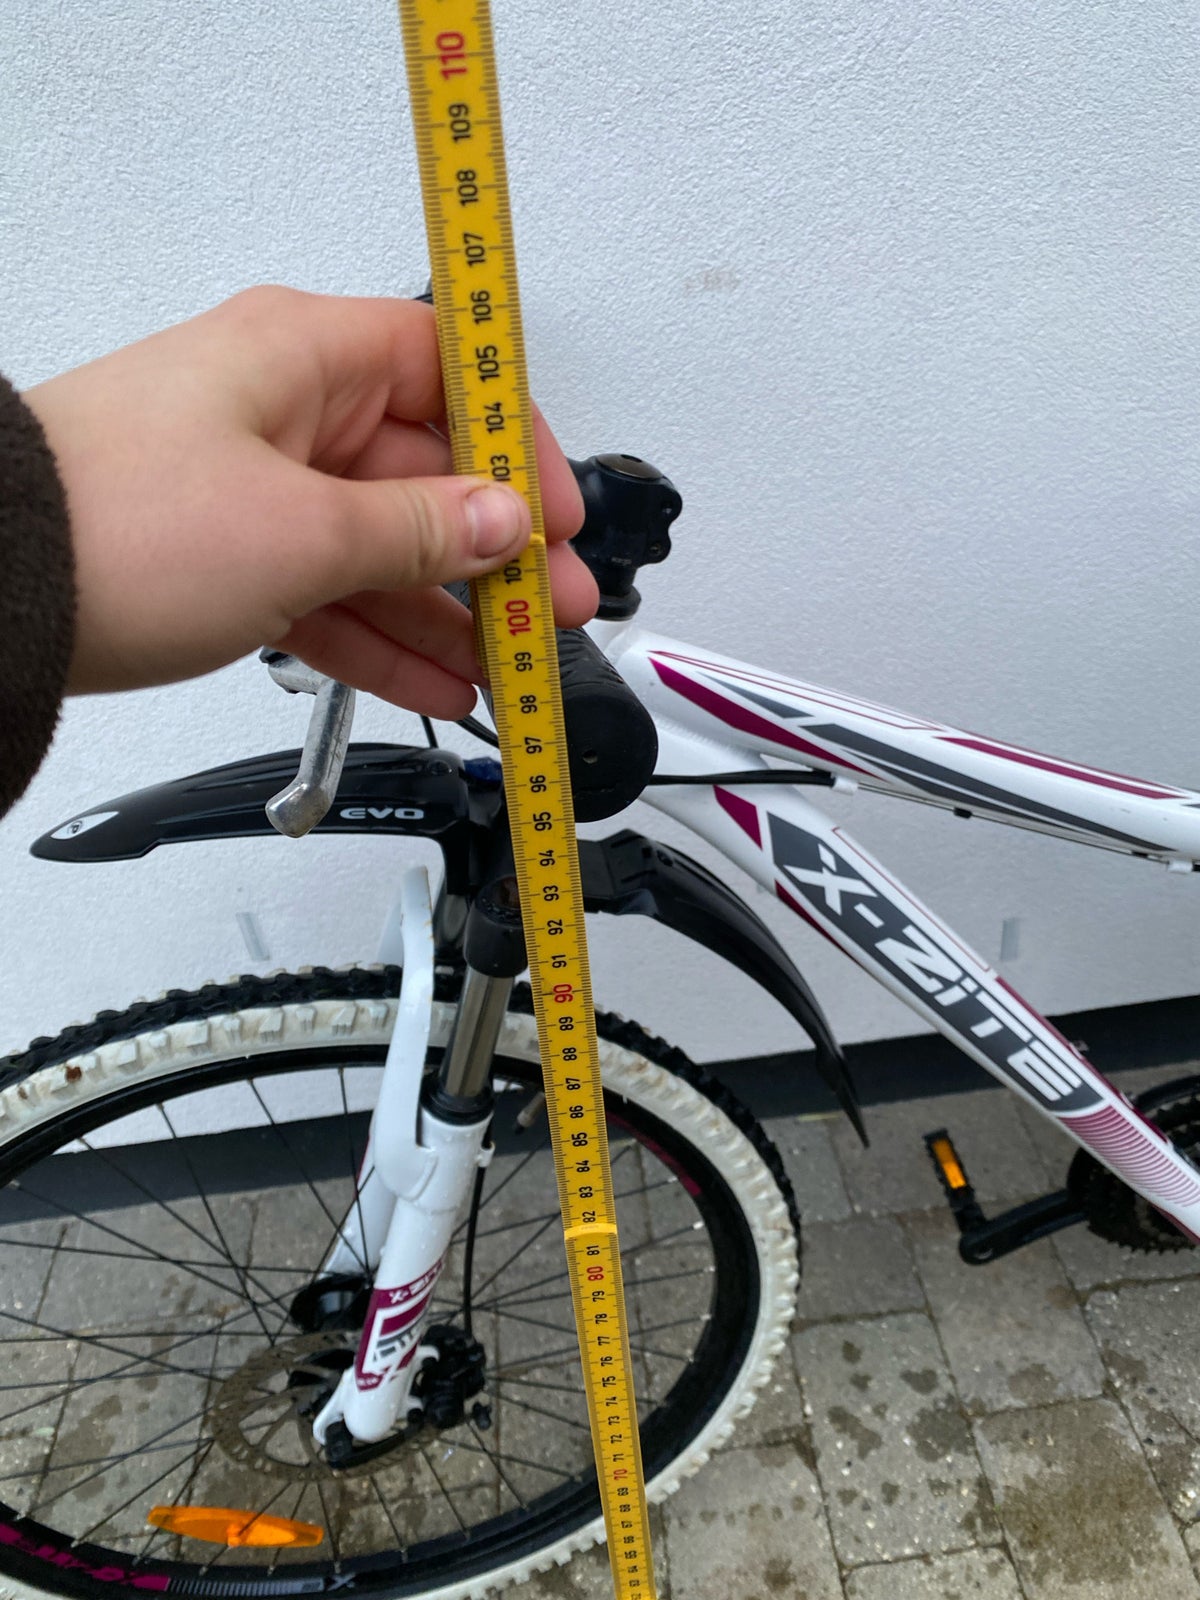 Unisex børnecykel, mountainbike, X-zite